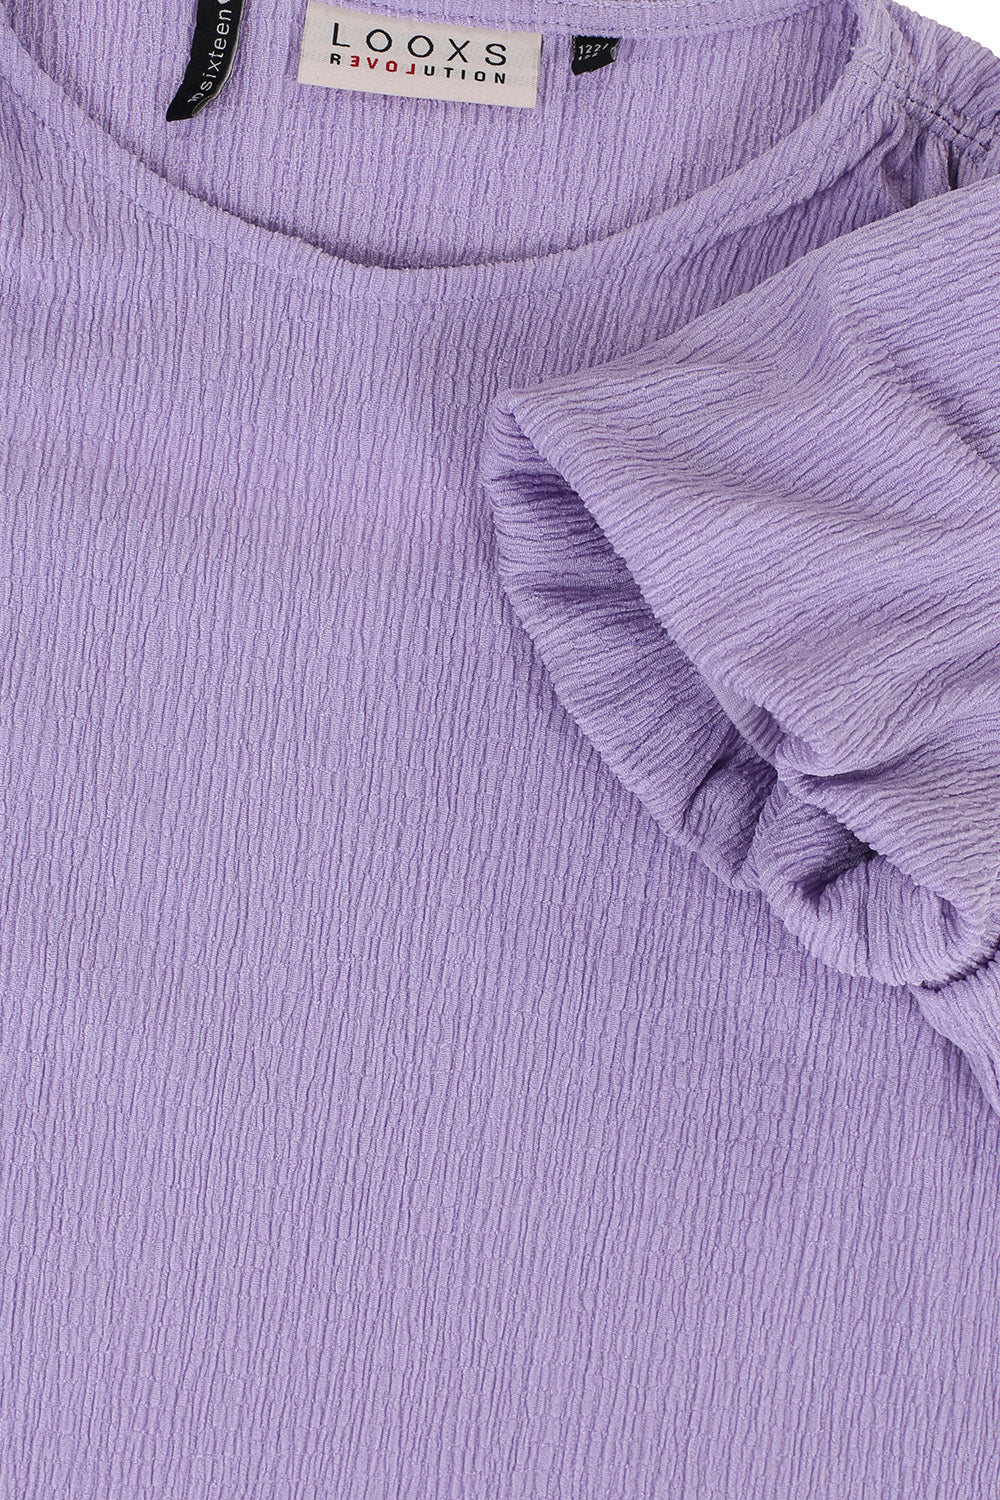 Meisjes Cinkle Top van LOOXS 10sixteen in de kleur Pale purple in maat 176.